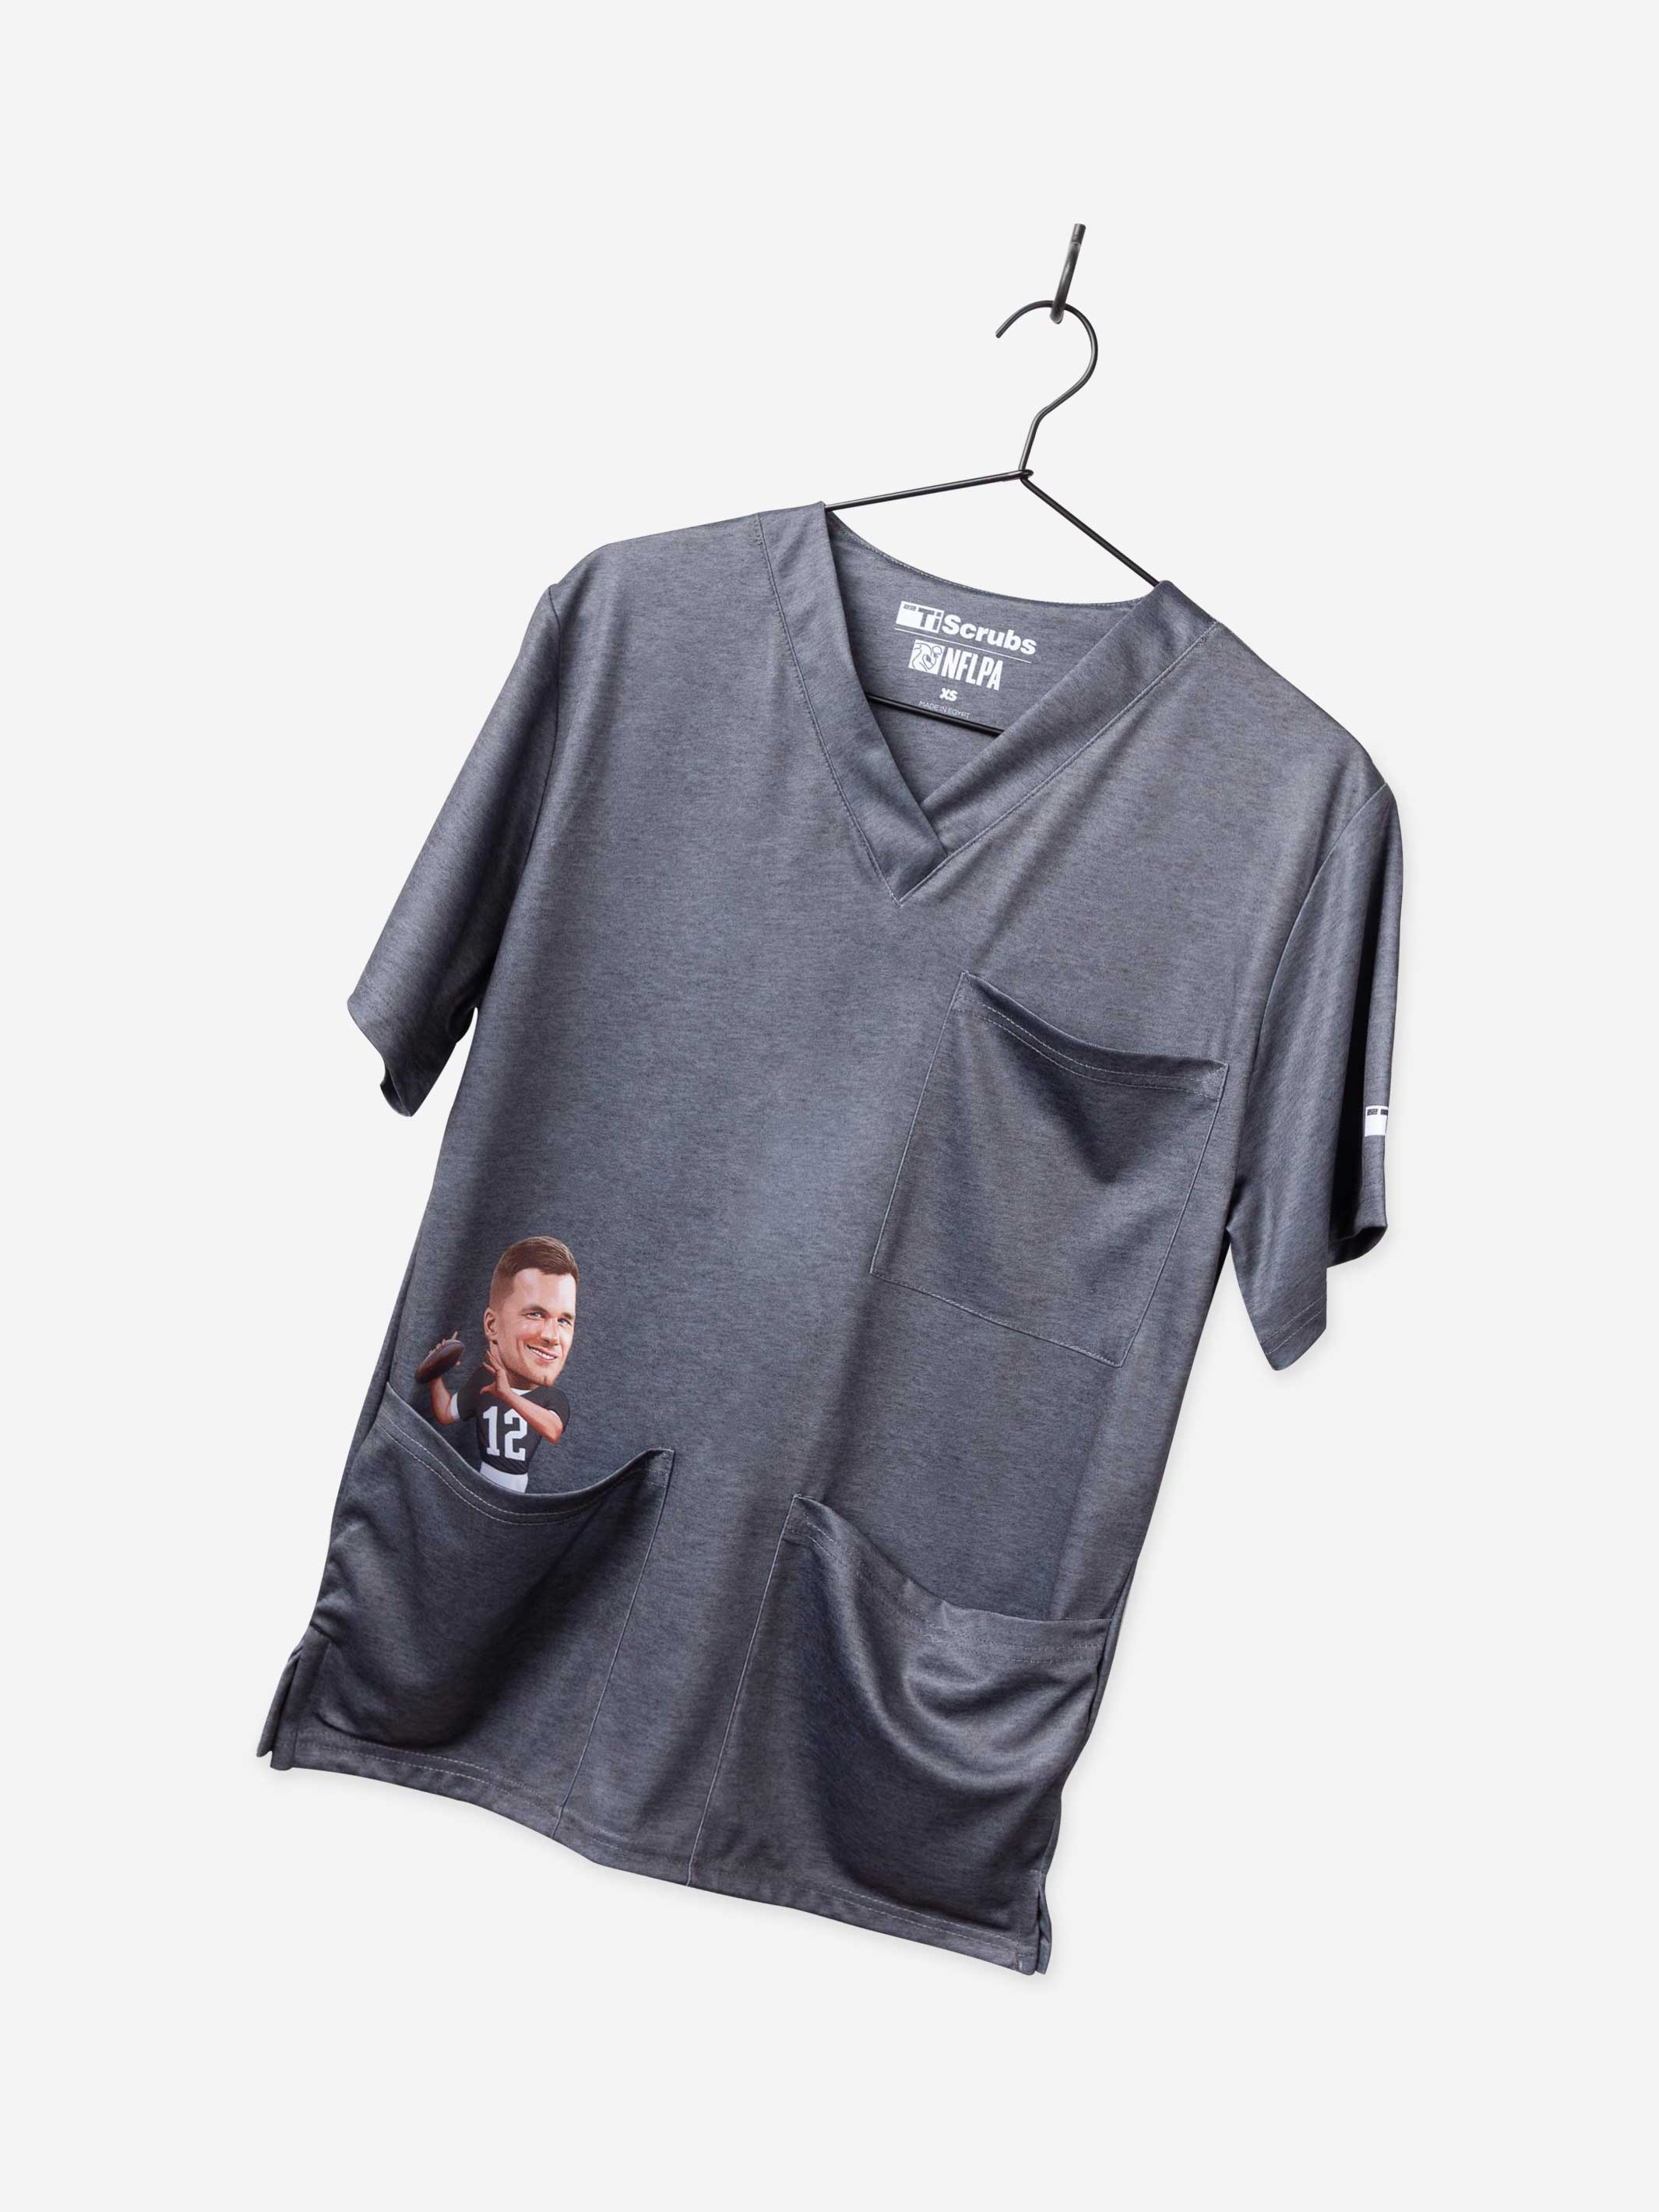 Men's NFLPA Tom Brady Scrub Top in dark gray with 3 pockets and v-neck